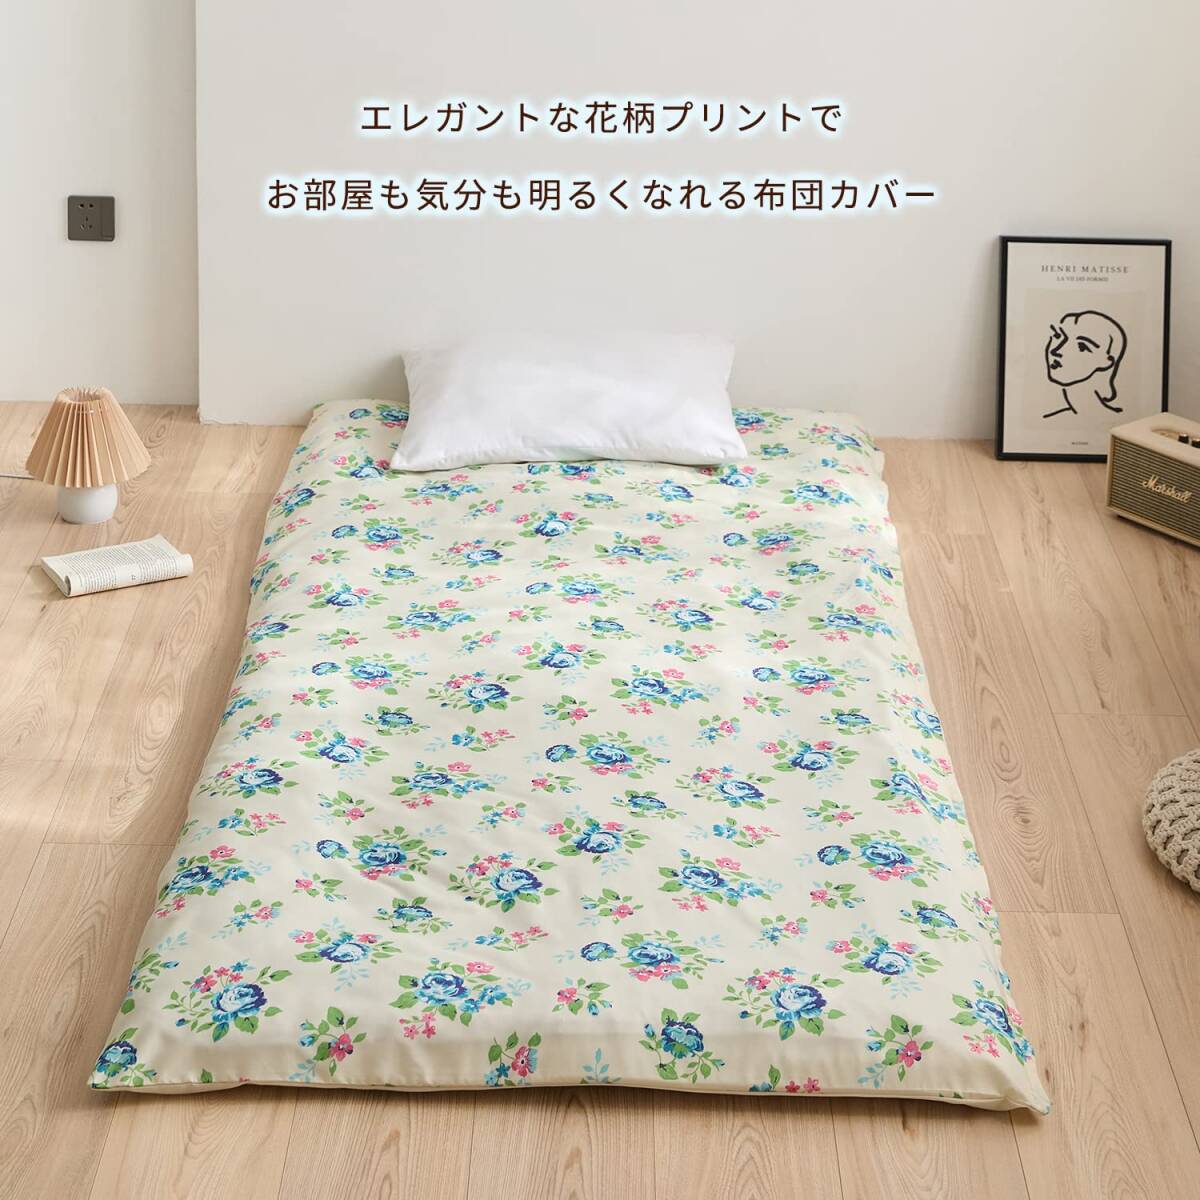  three .(SANKO) bed futon cover single long glow z pattern blue opening fully fastener stylish lovely 341632-3813